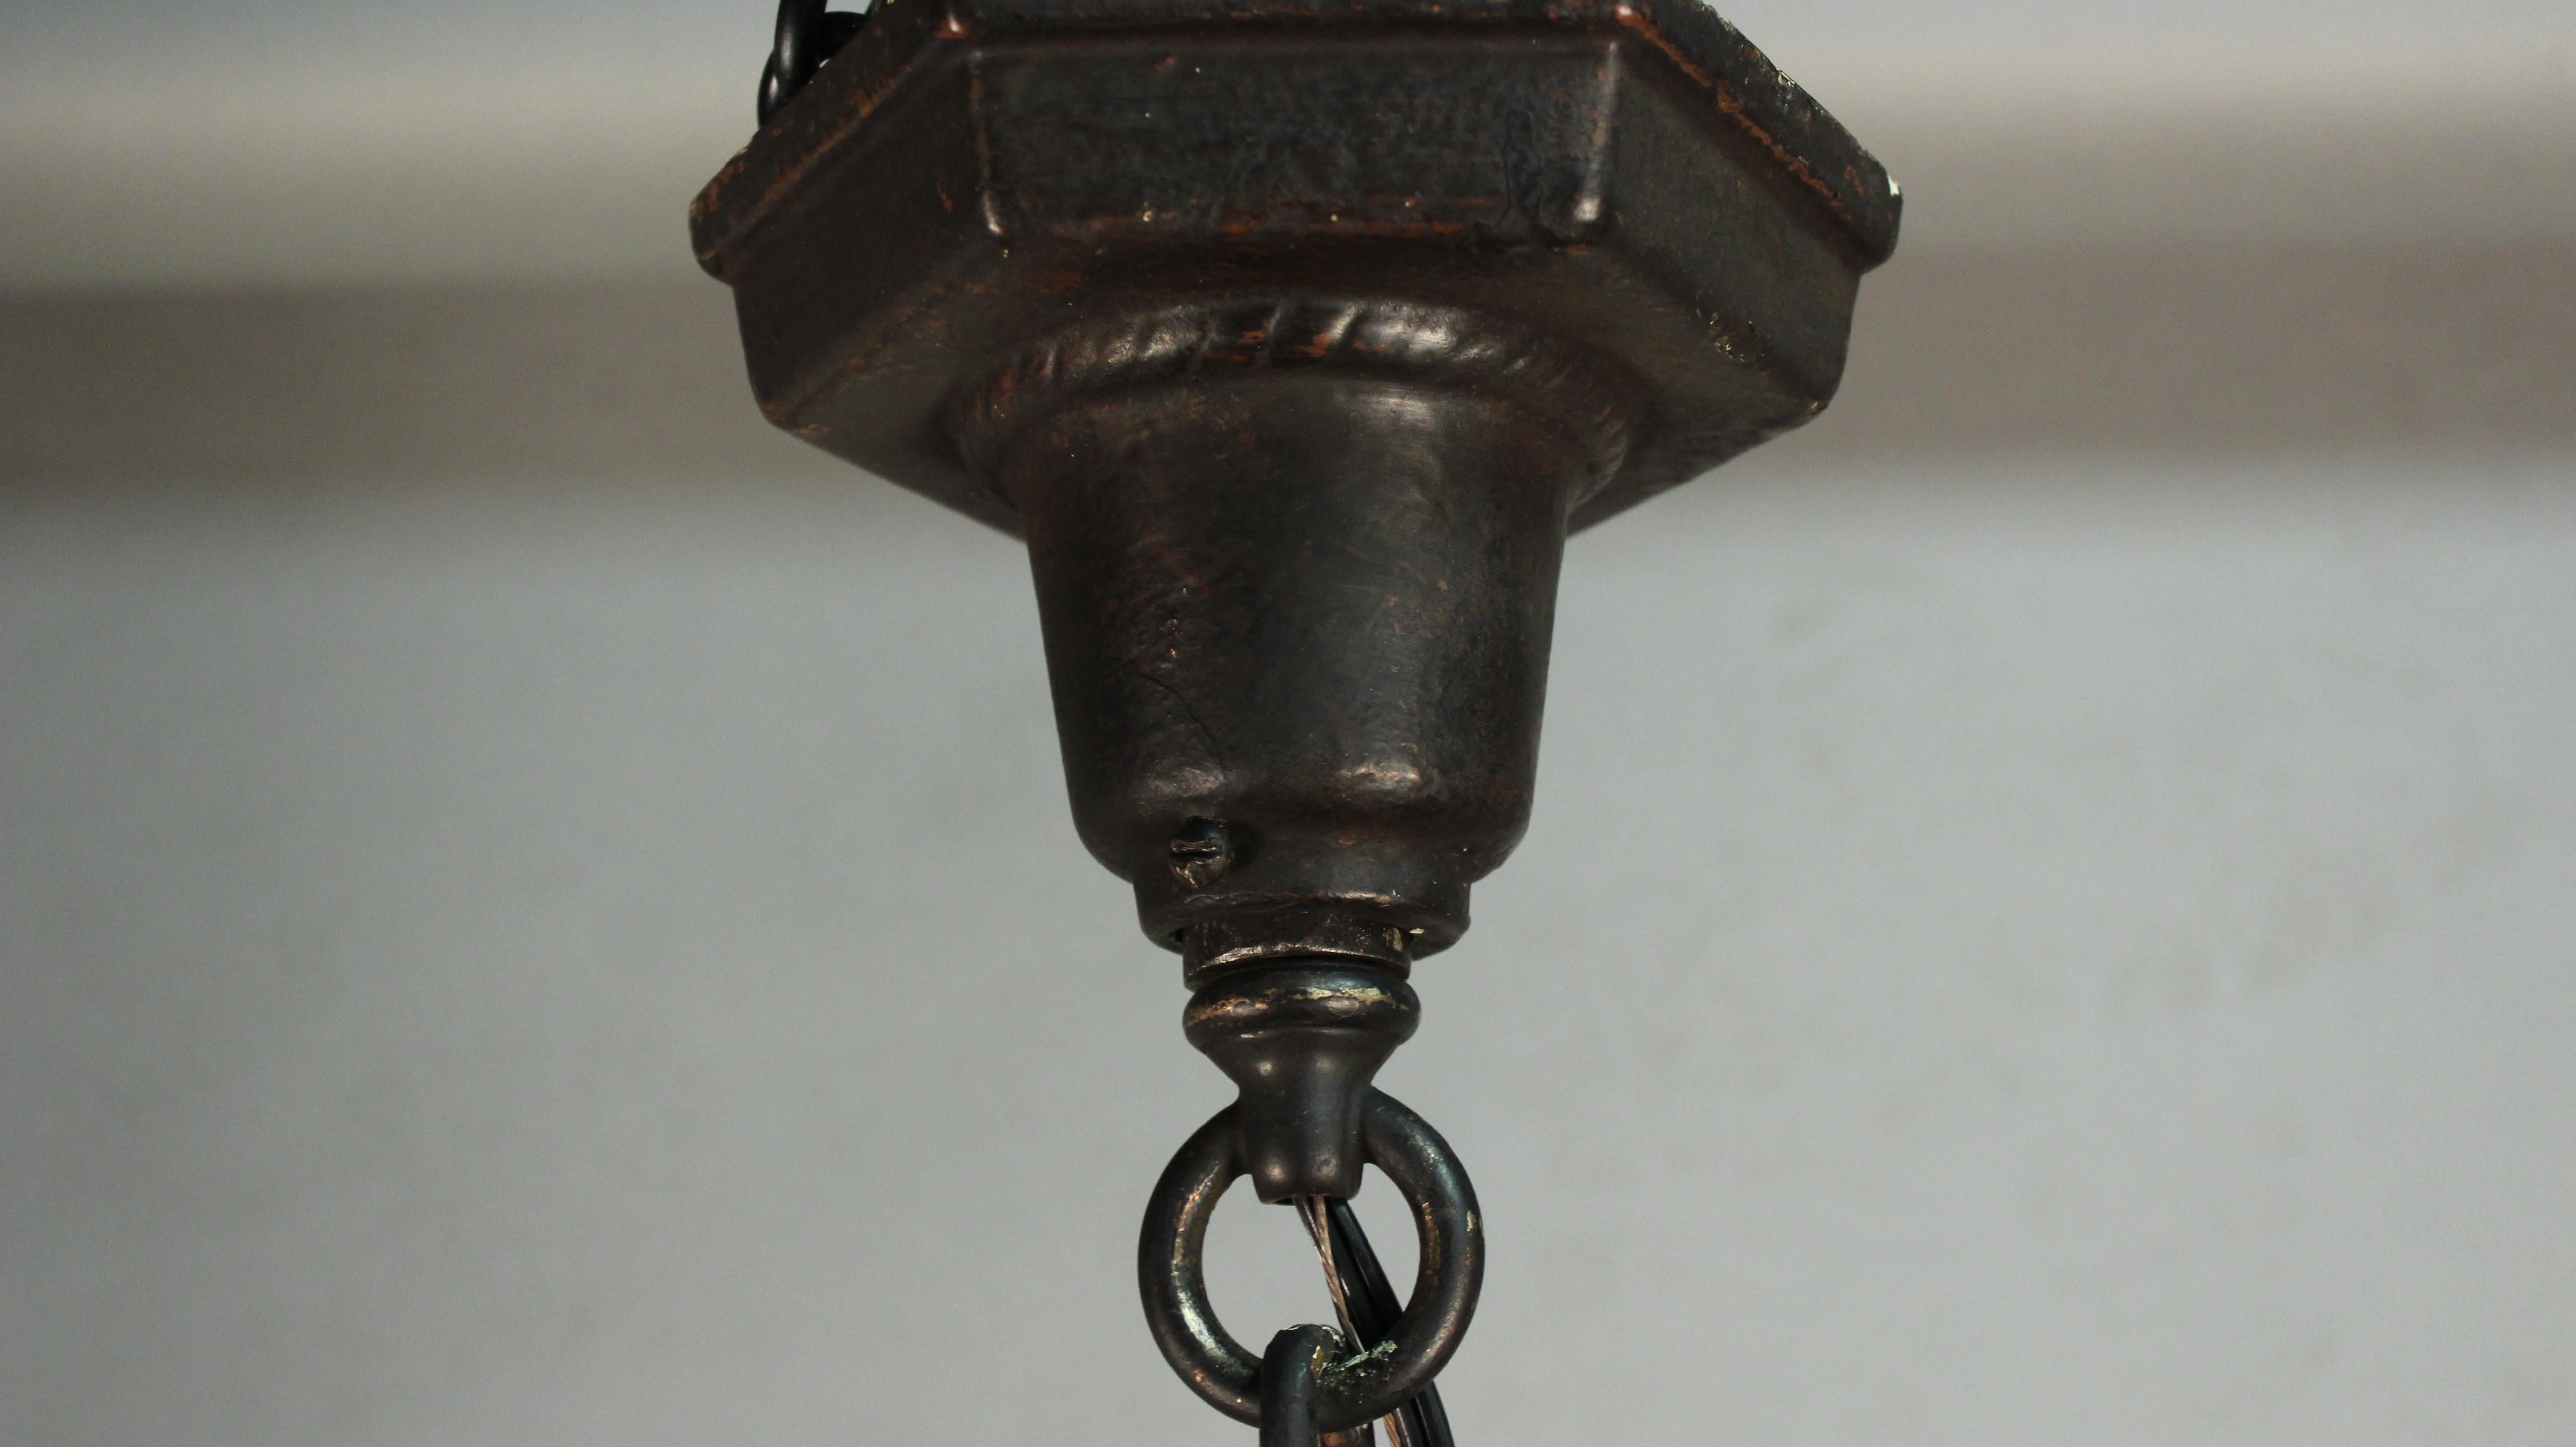 North American Antique 1920s Exterior Spanish Revival English Tudor Iron Lantern